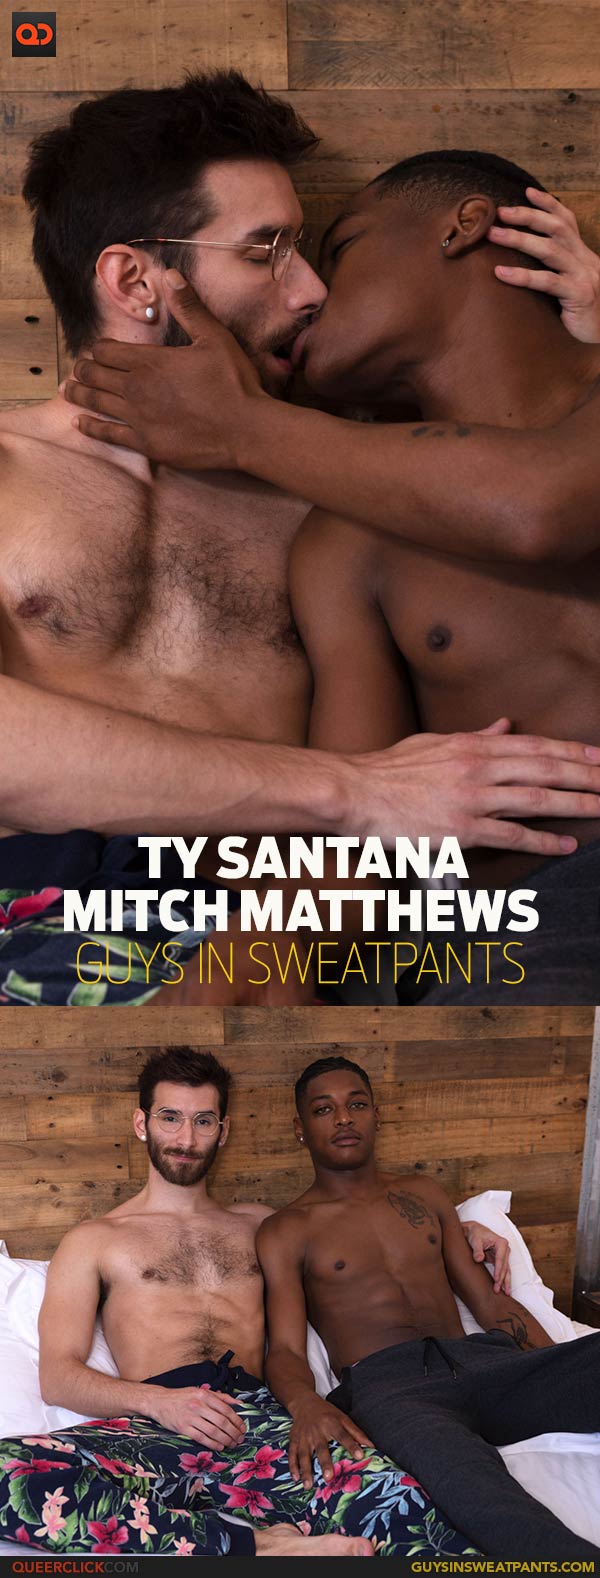 Guys in Sweatpants: Mitch Matthews and Ty Santana 